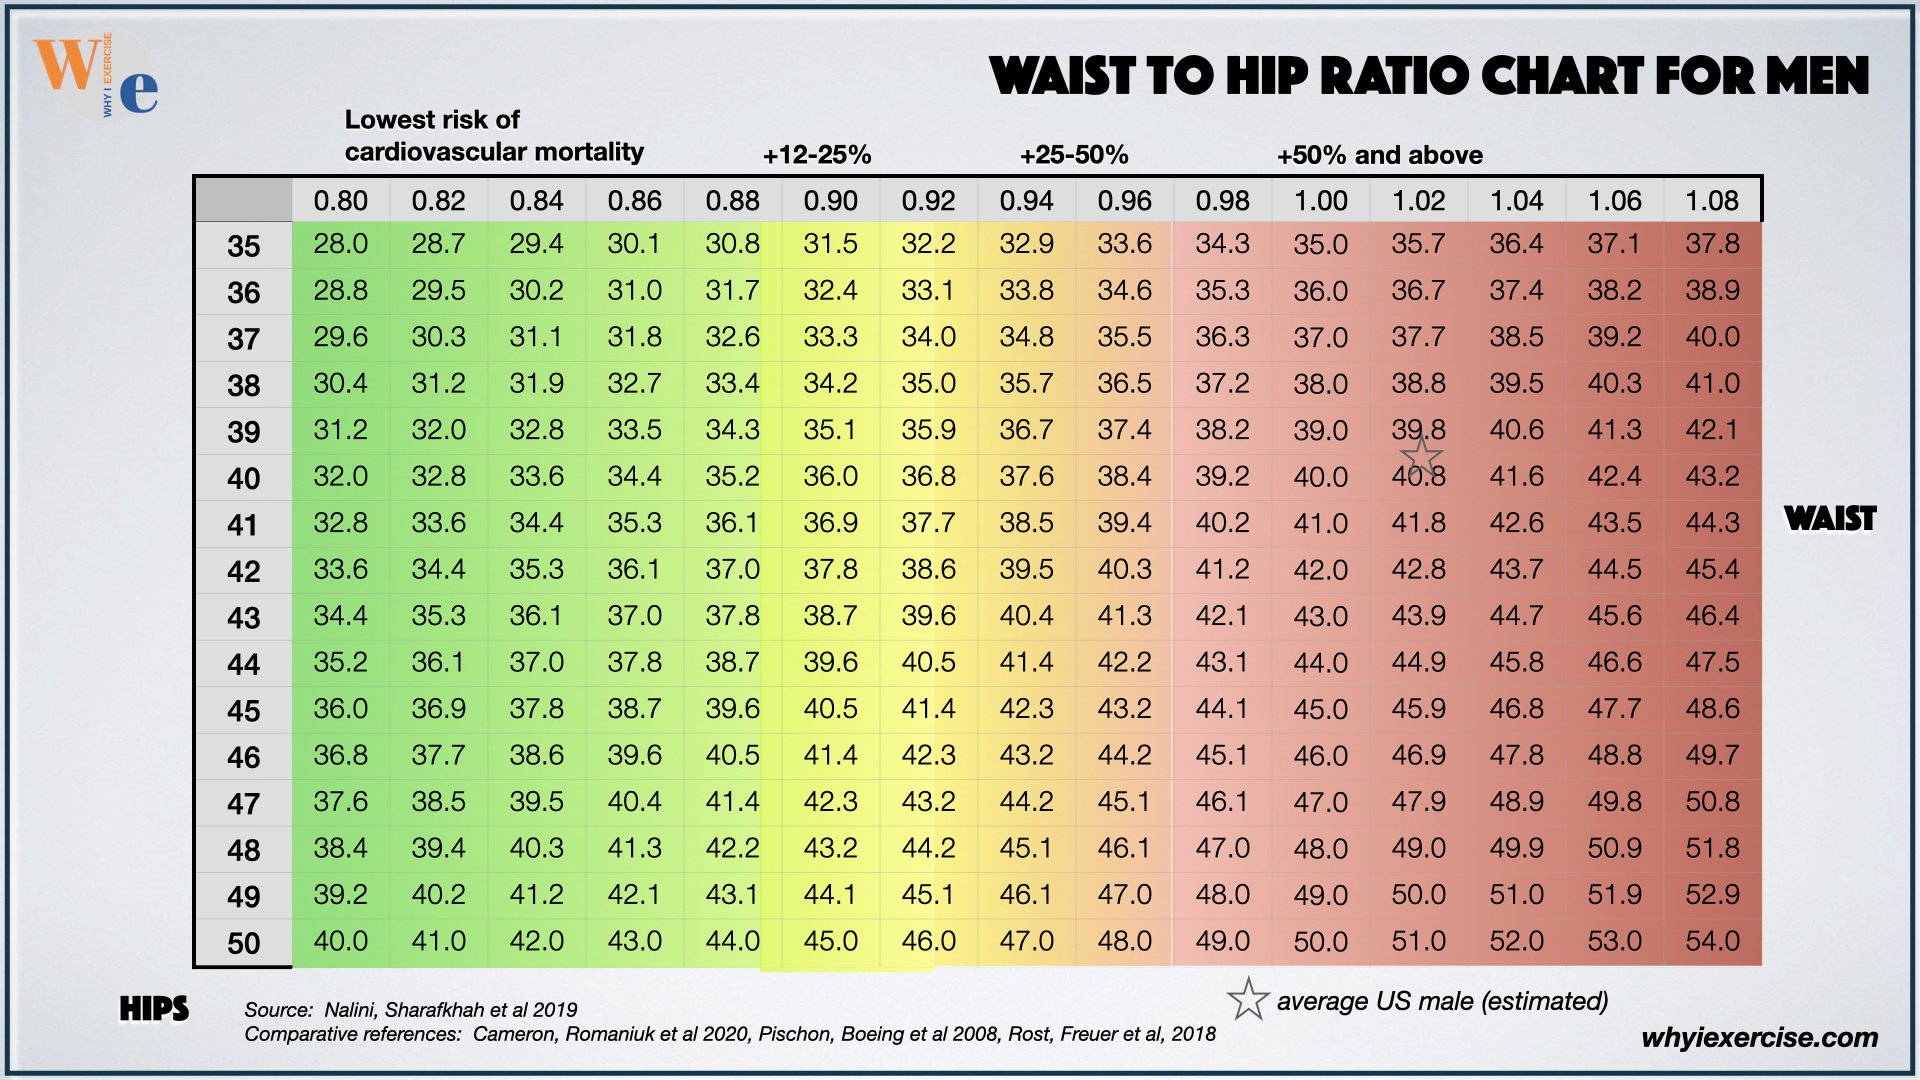 Waist-to-hip ratio chart for men